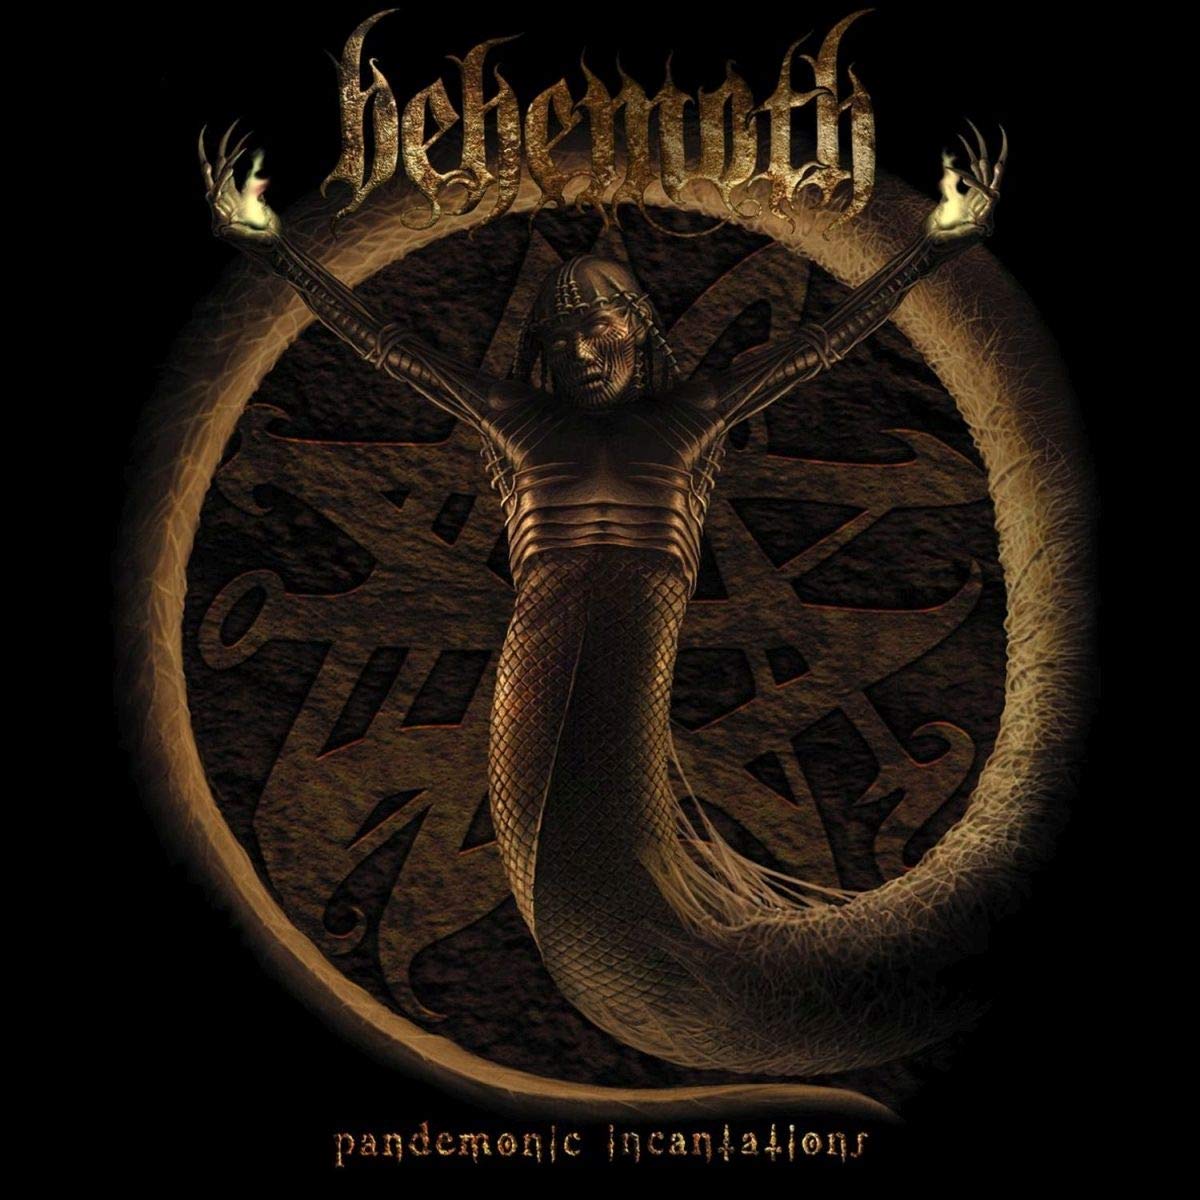 CD Behemoth - Pandemonic incantations